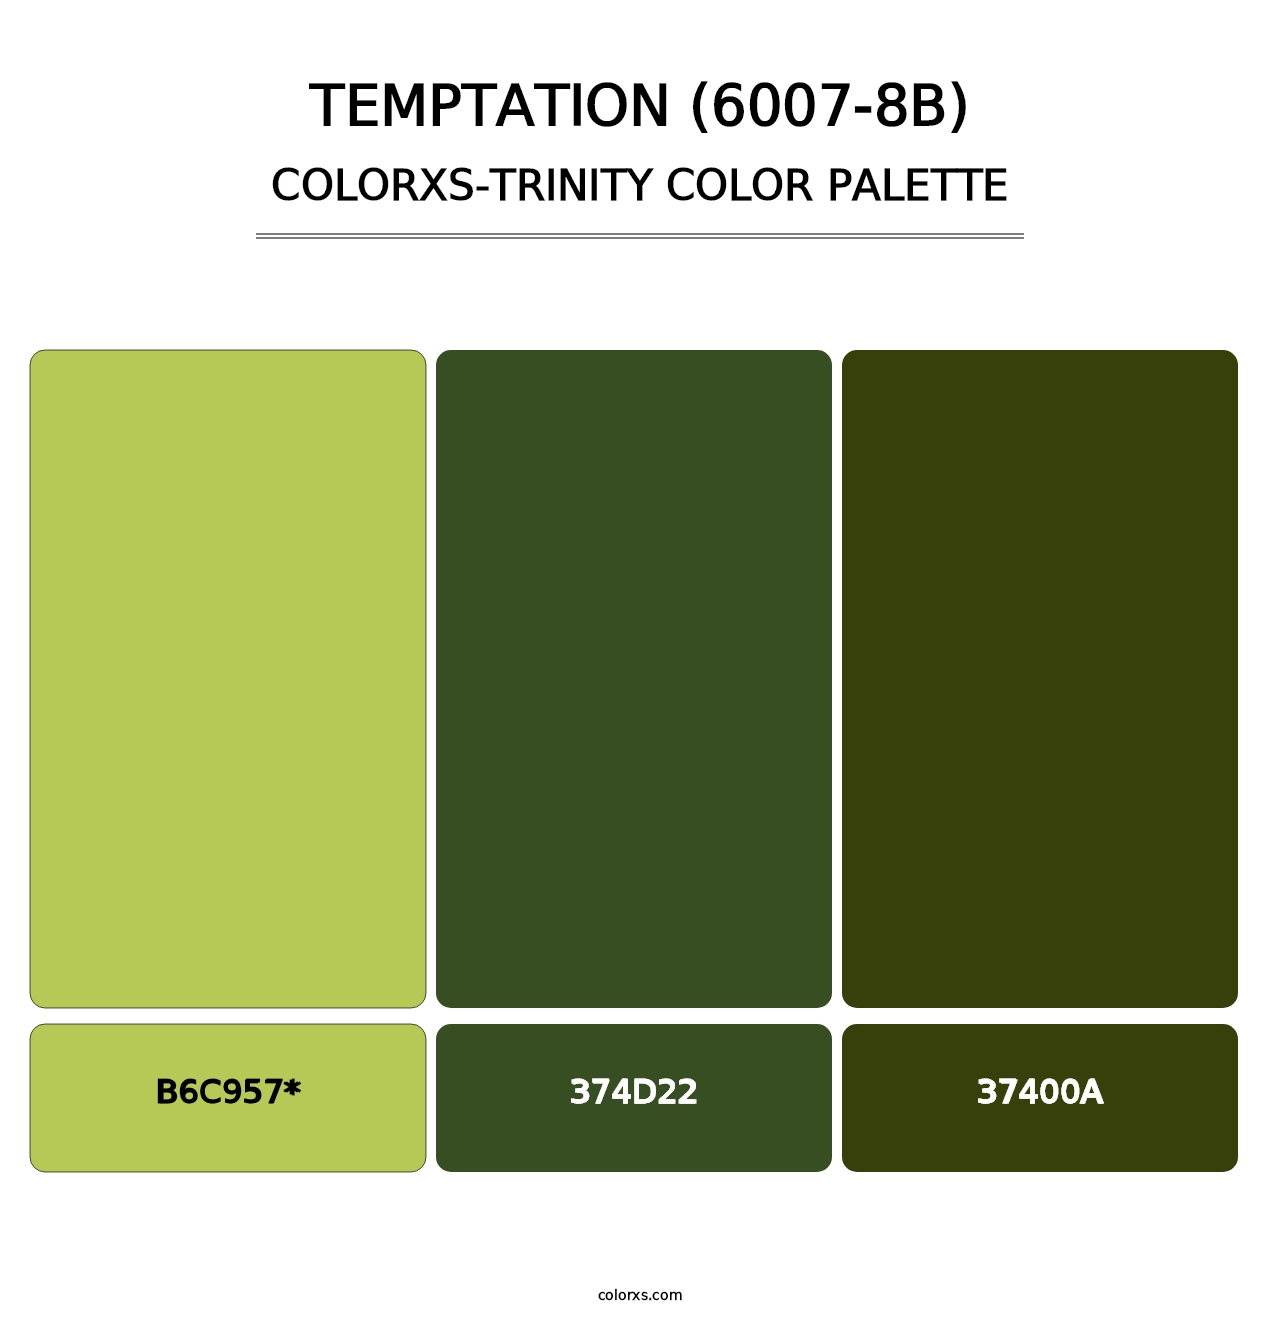 Temptation (6007-8B) - Colorxs Trinity Palette